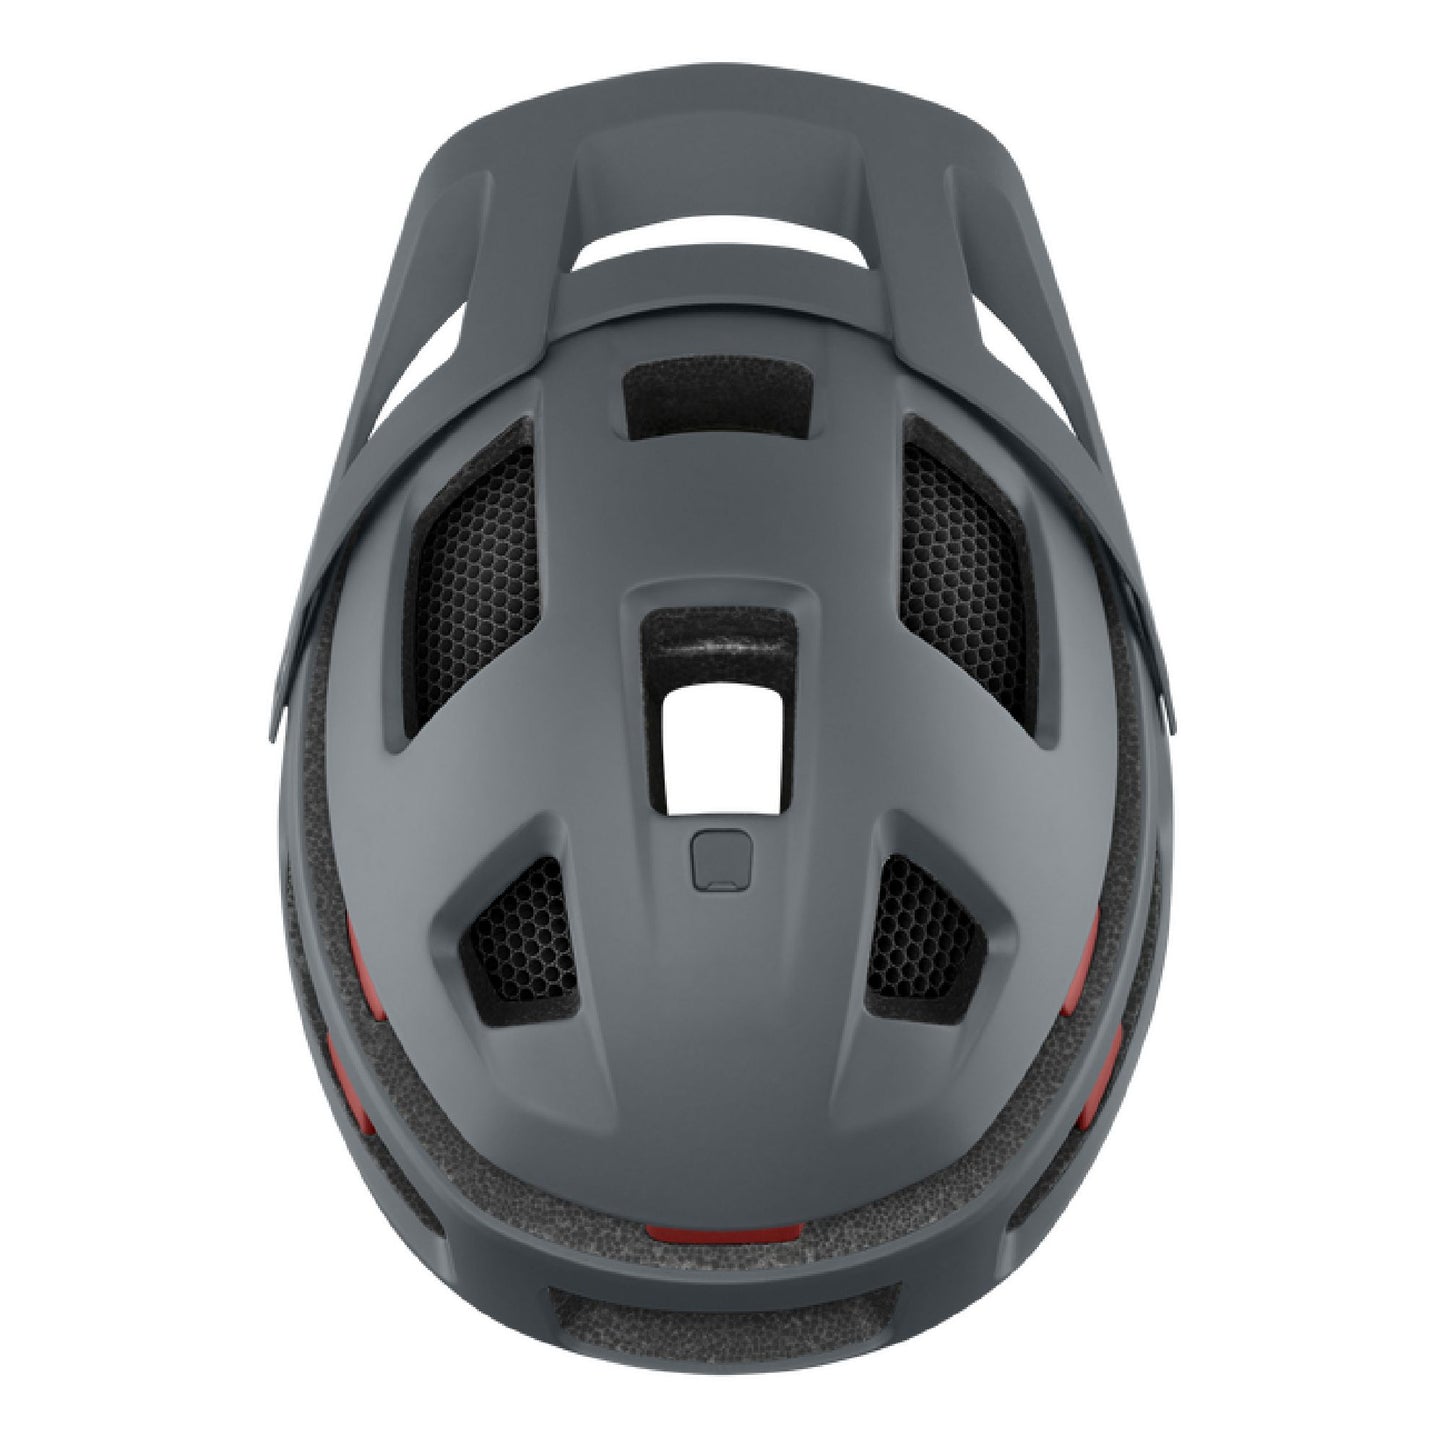 Smith Forefront 2 MIPS Helmet Matte Slate / Fool's Gold / Terra Bike Helmets